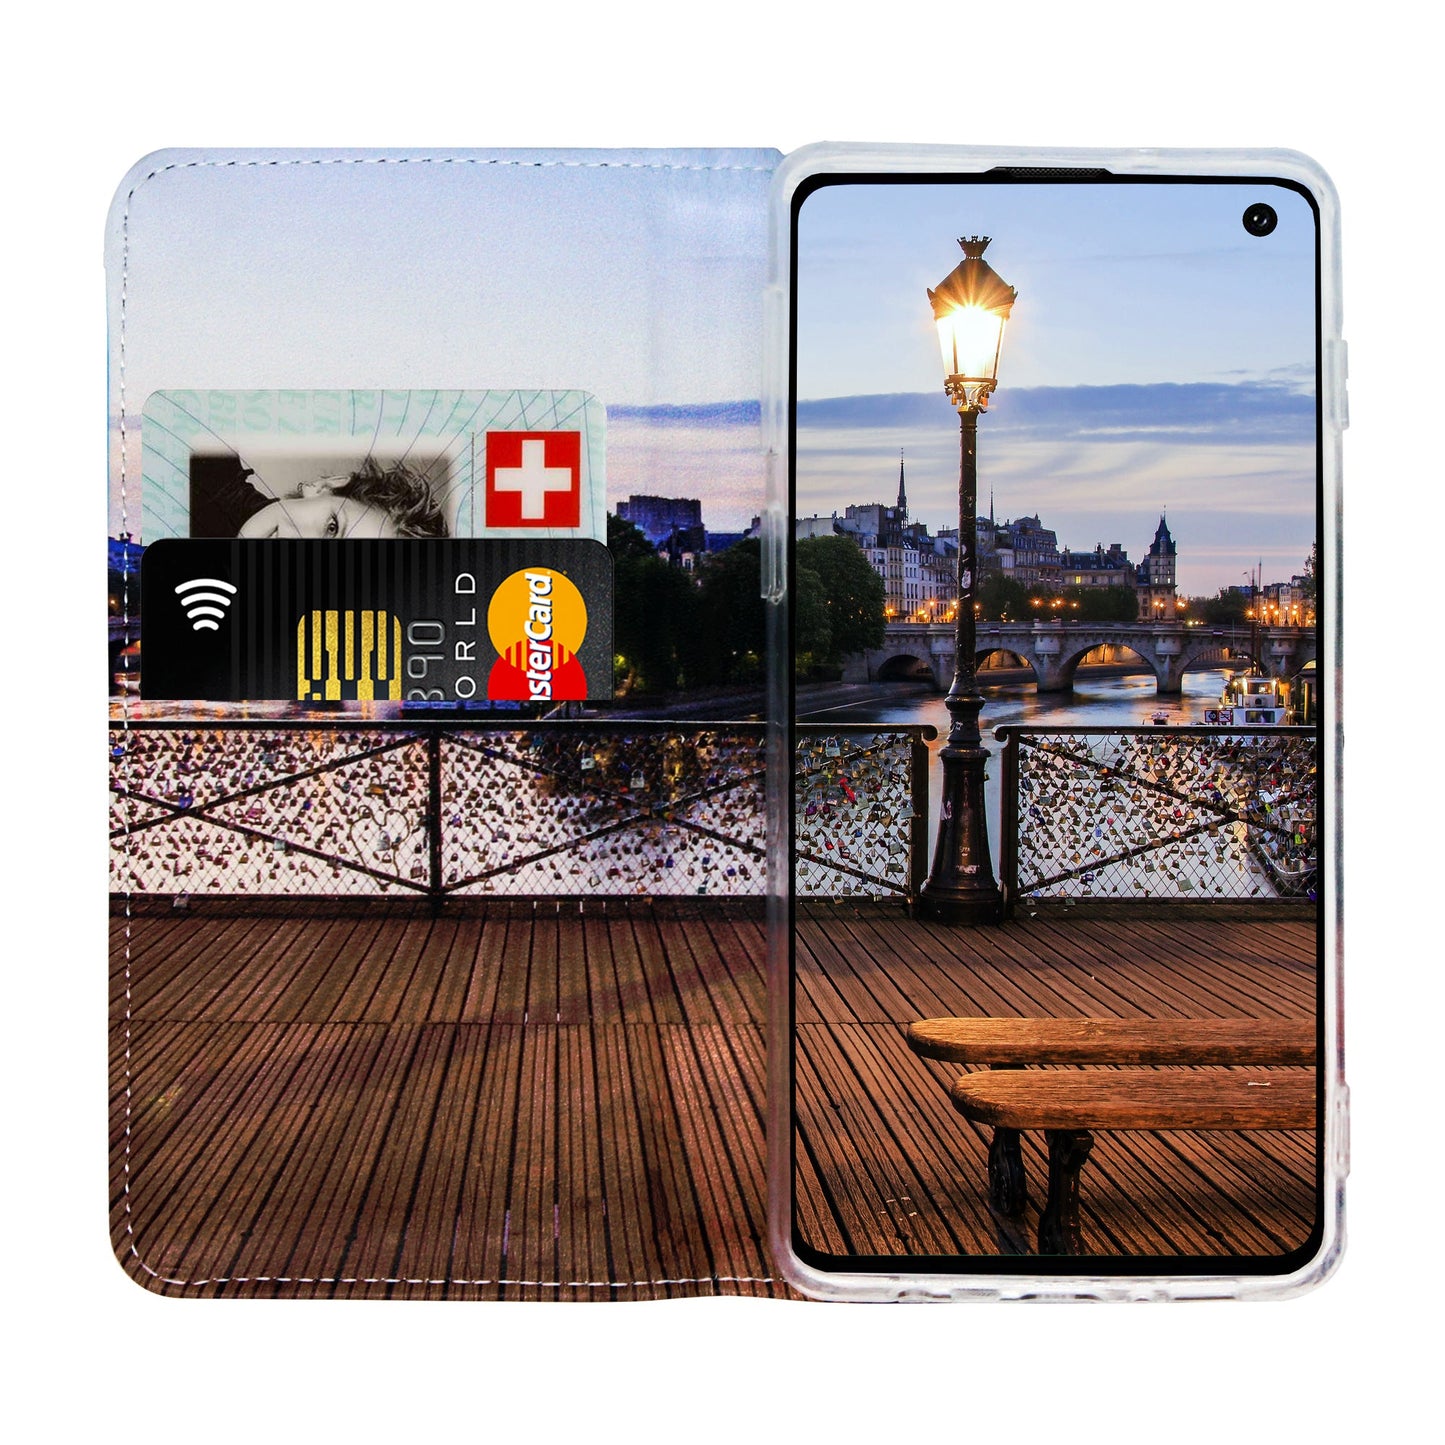 Coque Paris City Panorama pour Samsung Galaxy S10 Plus